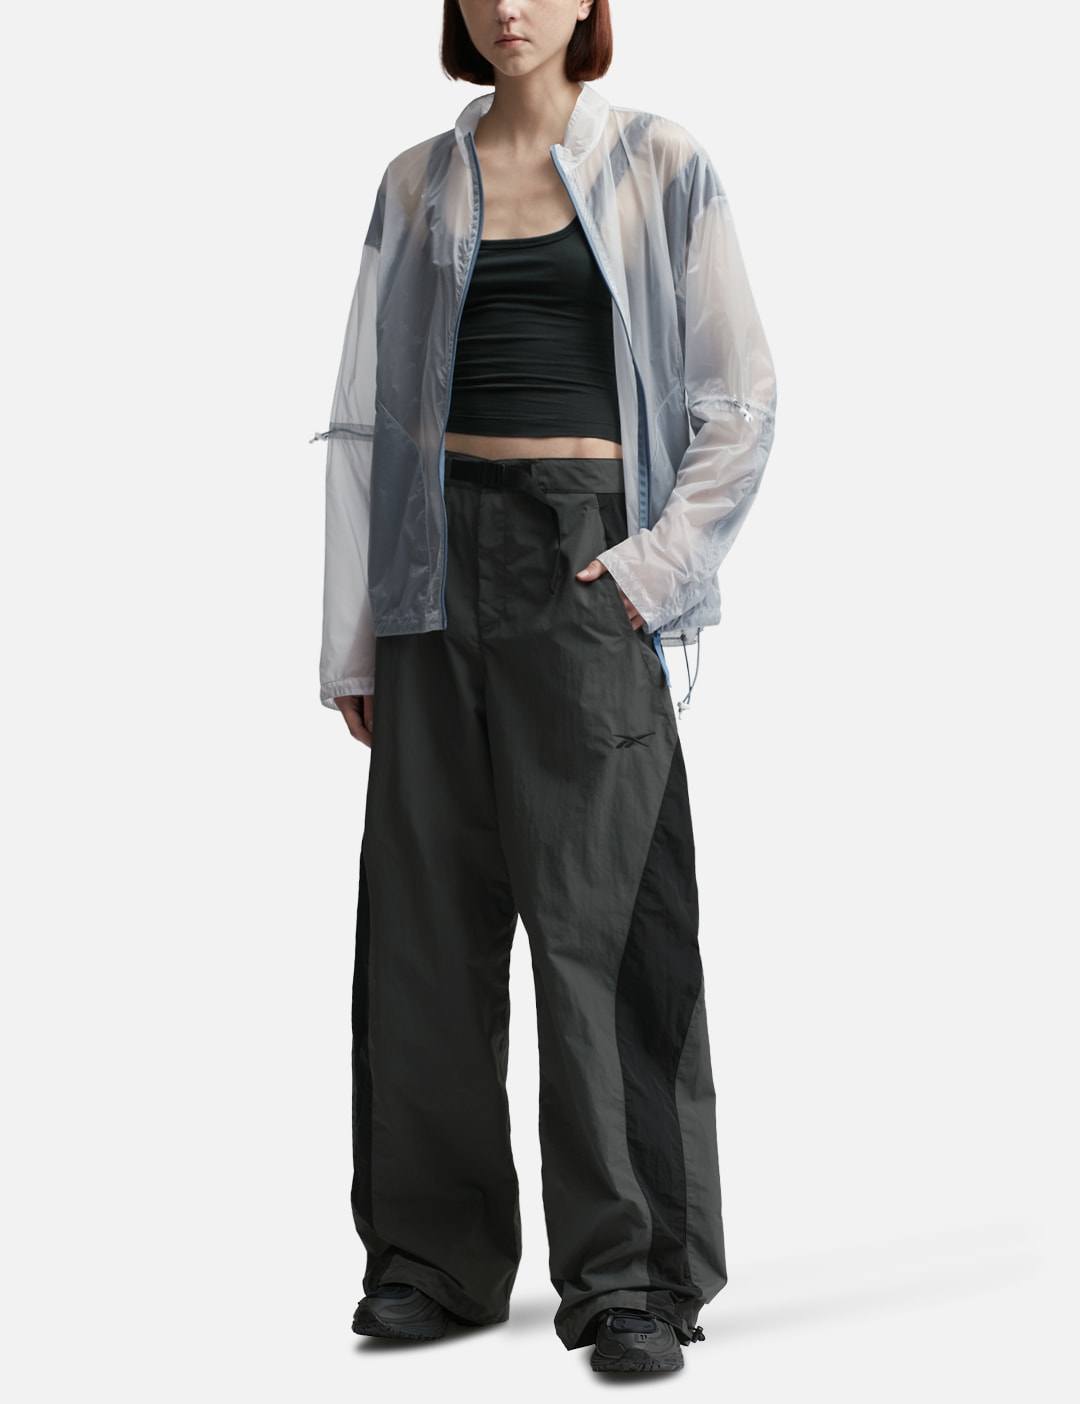 Prada pants black for women 169651 — Women trousers